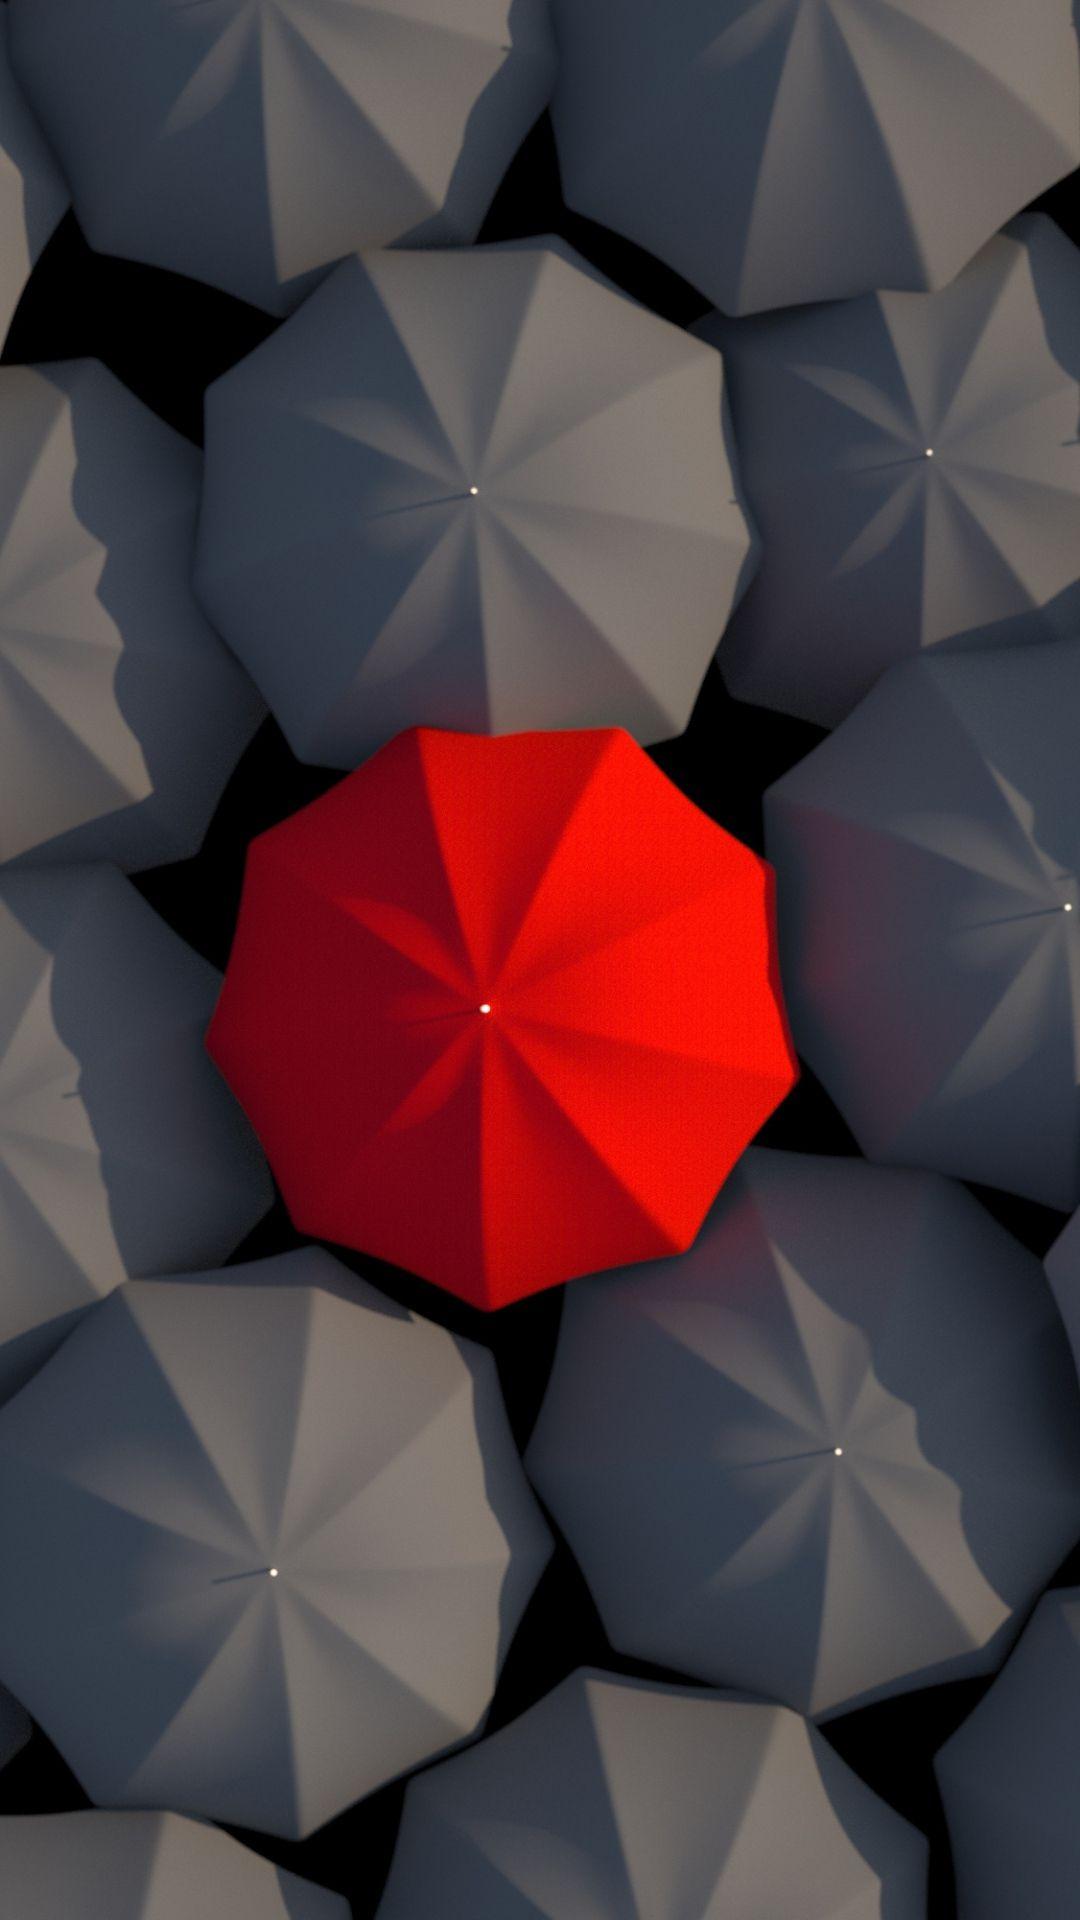 Umbrellas 3D Red Gray iPhone 8 Wallpaper Free Download